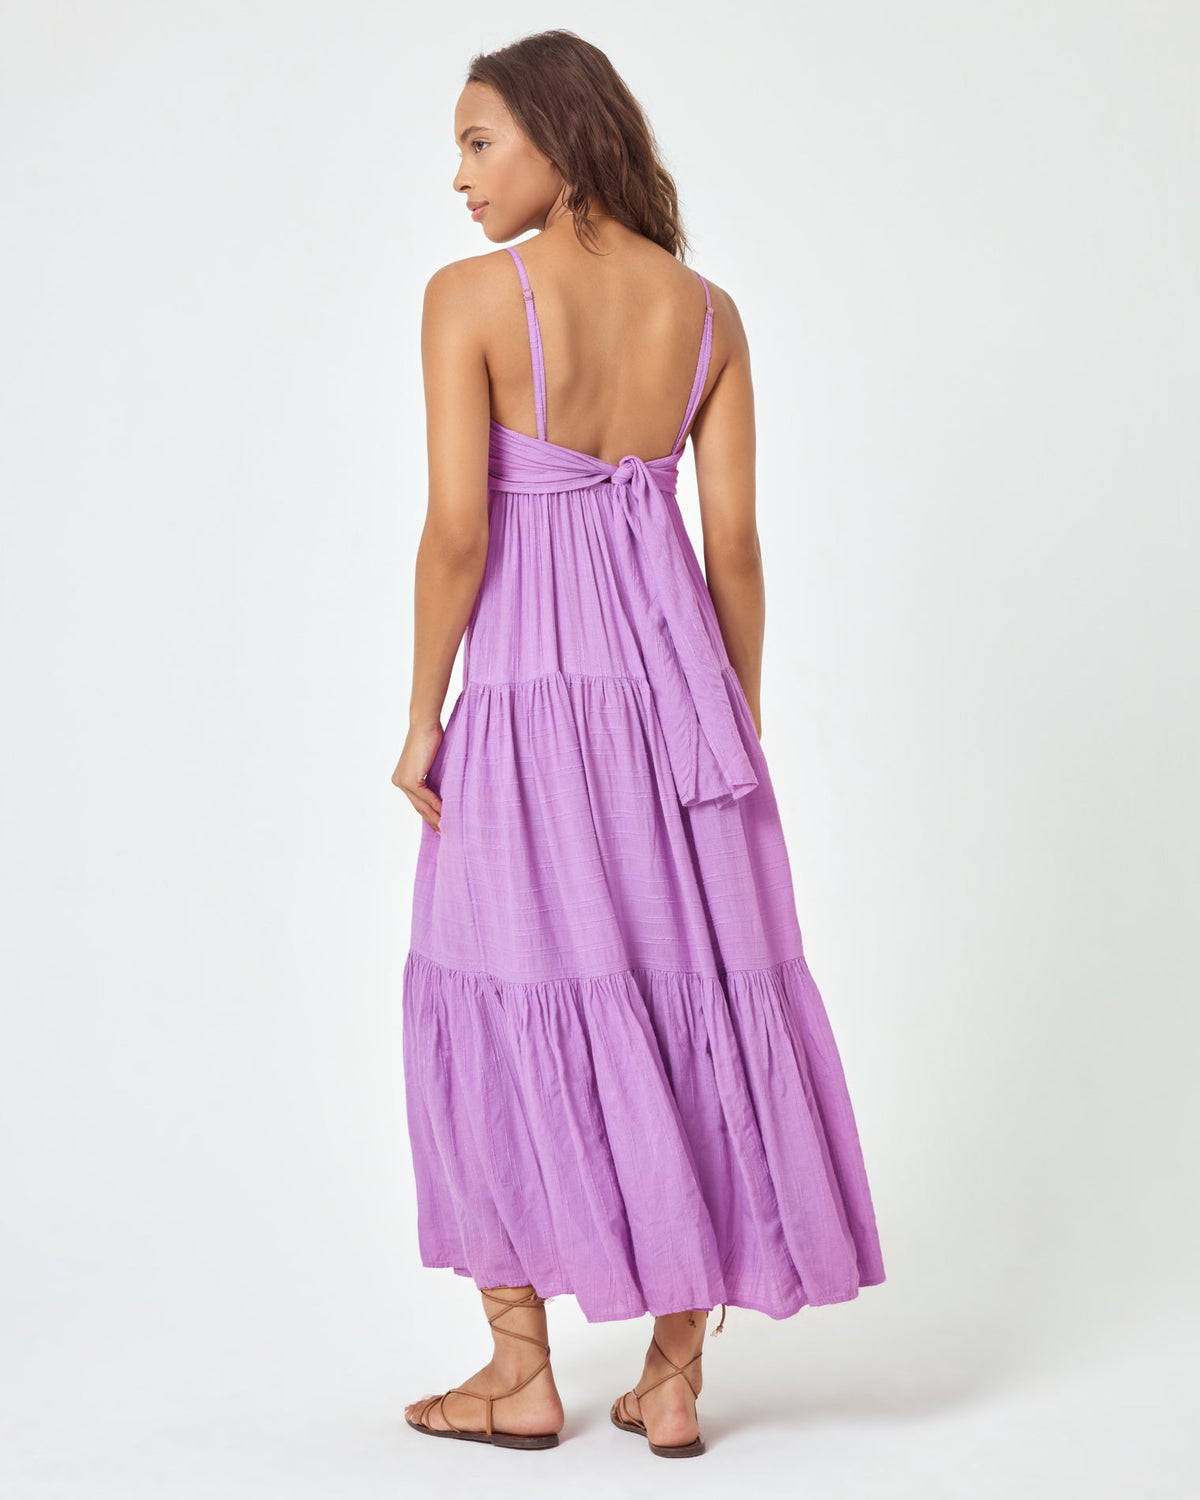 Santorini Dress Jewel | Model: Natalie (size: S)